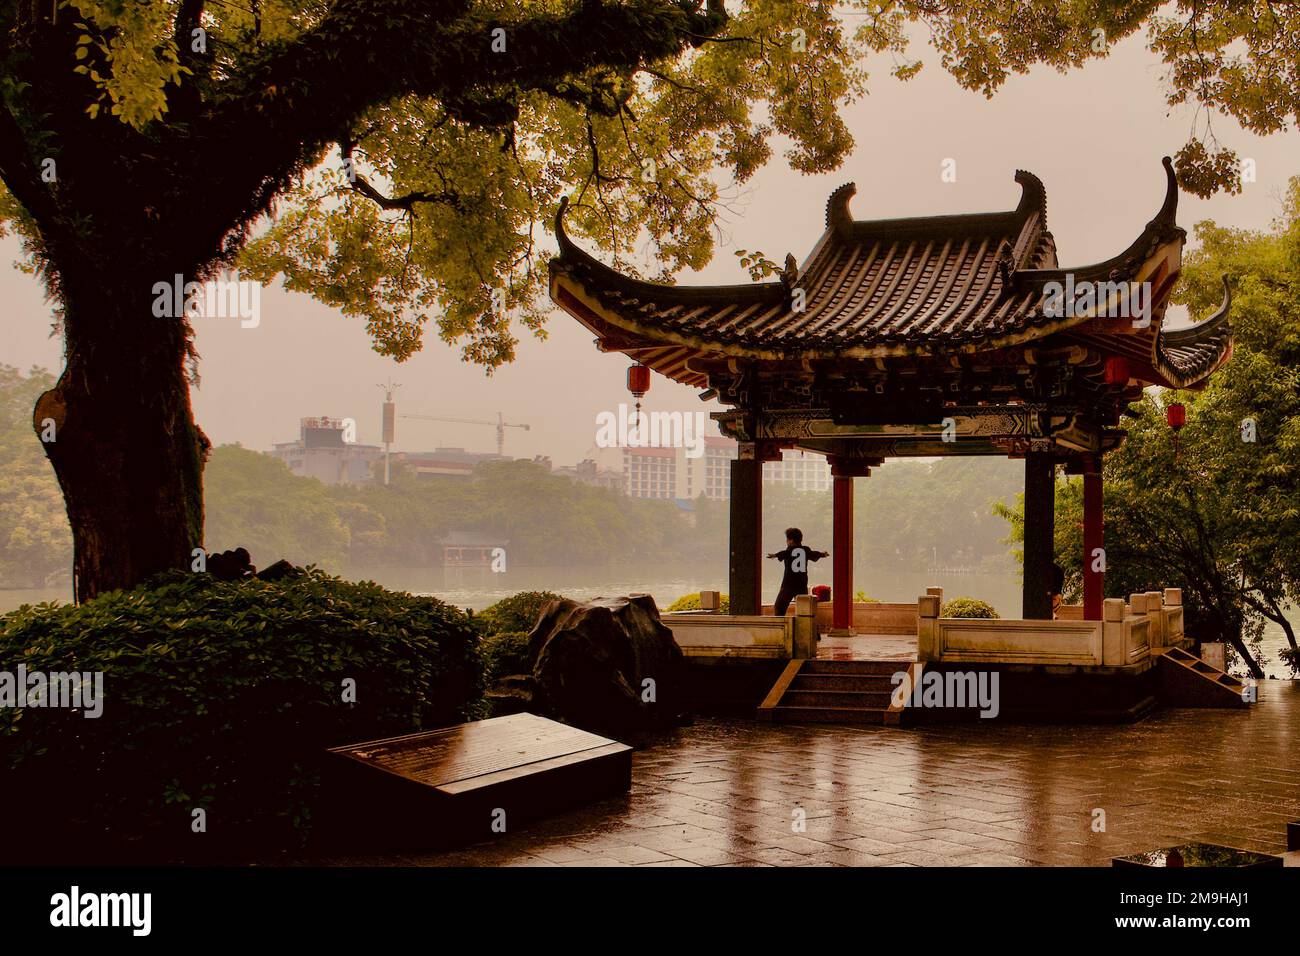 Chinesischer Pavillon, Fluss und Bäume, Guilin, Autonome Region Guangxi Zhuang, China Stockfoto